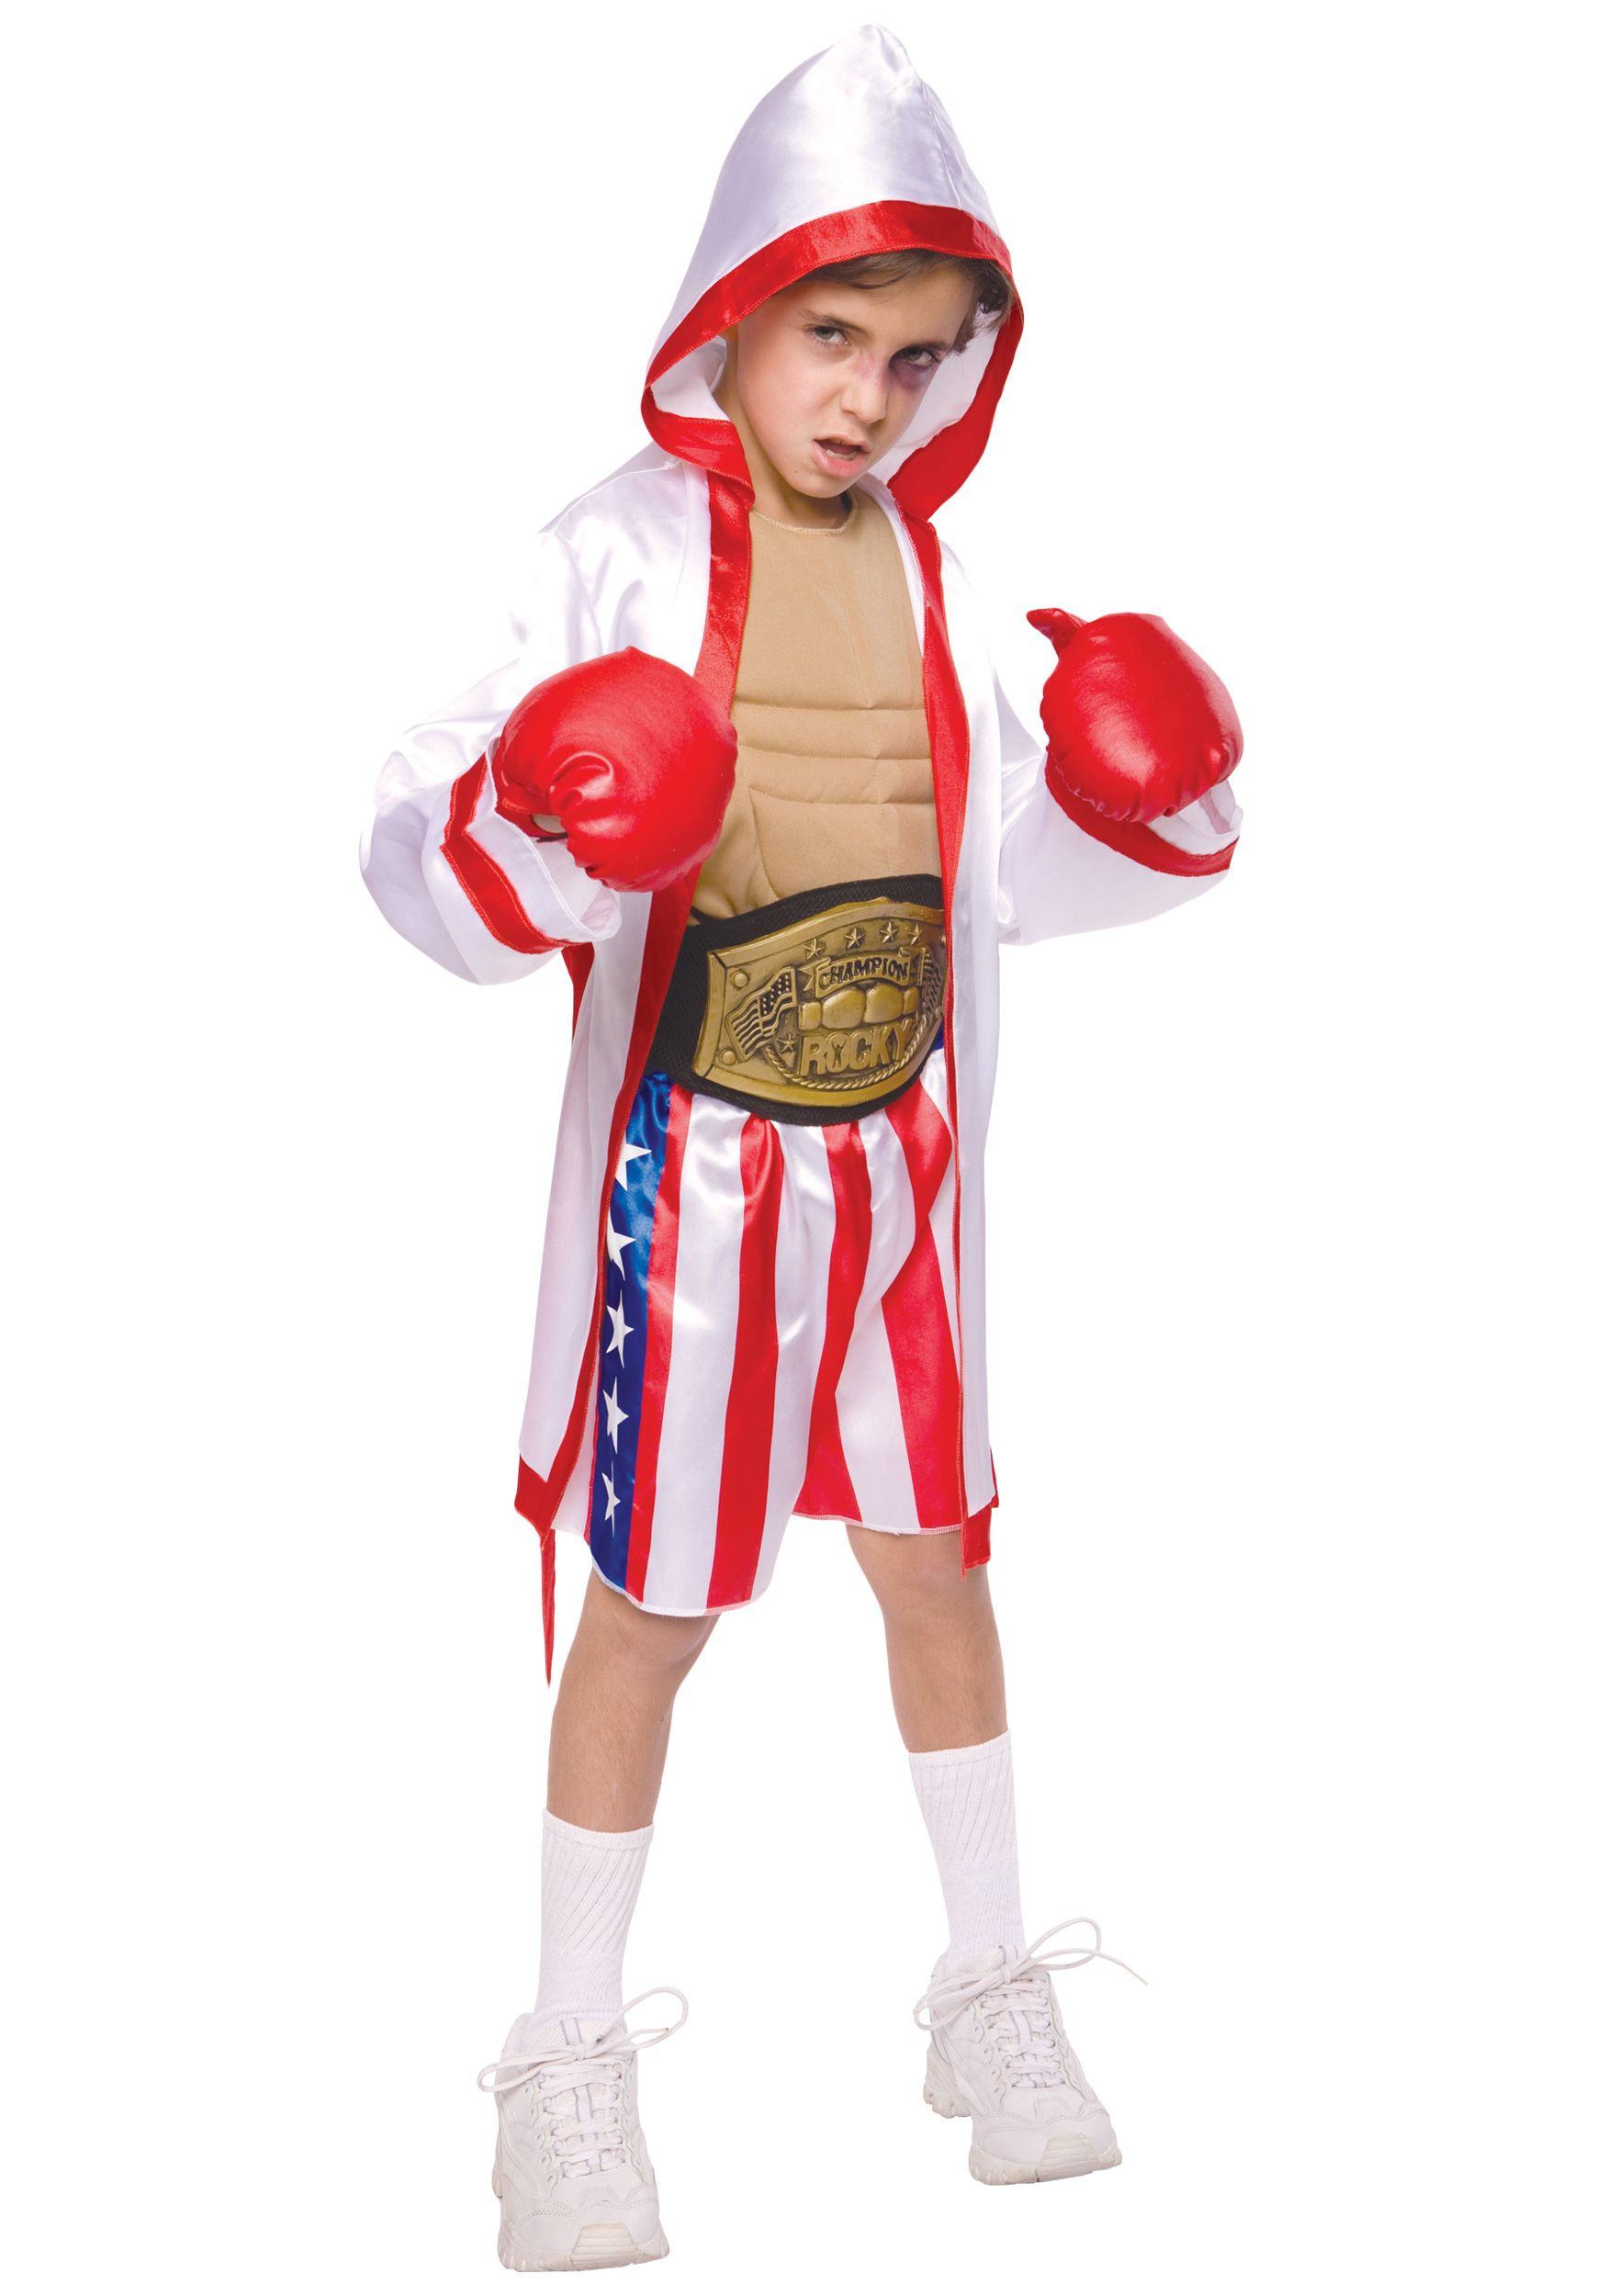 DIY Boxing Costume
 Rocky Balboa costume